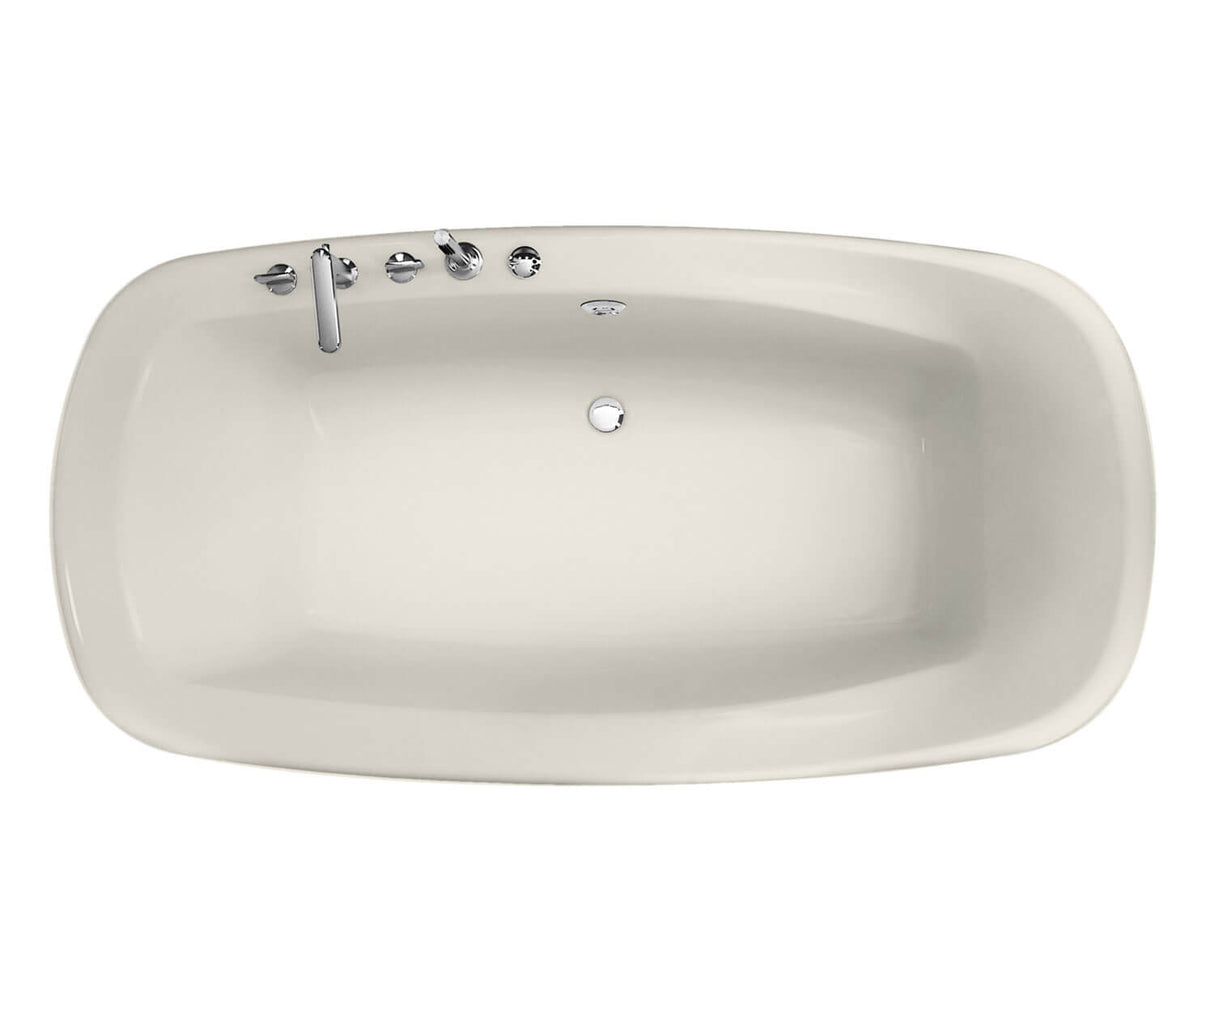 MAAX 101318-000-007 Eterne 7242 Acrylic Drop-in Center Drain Bathtub in Biscuit